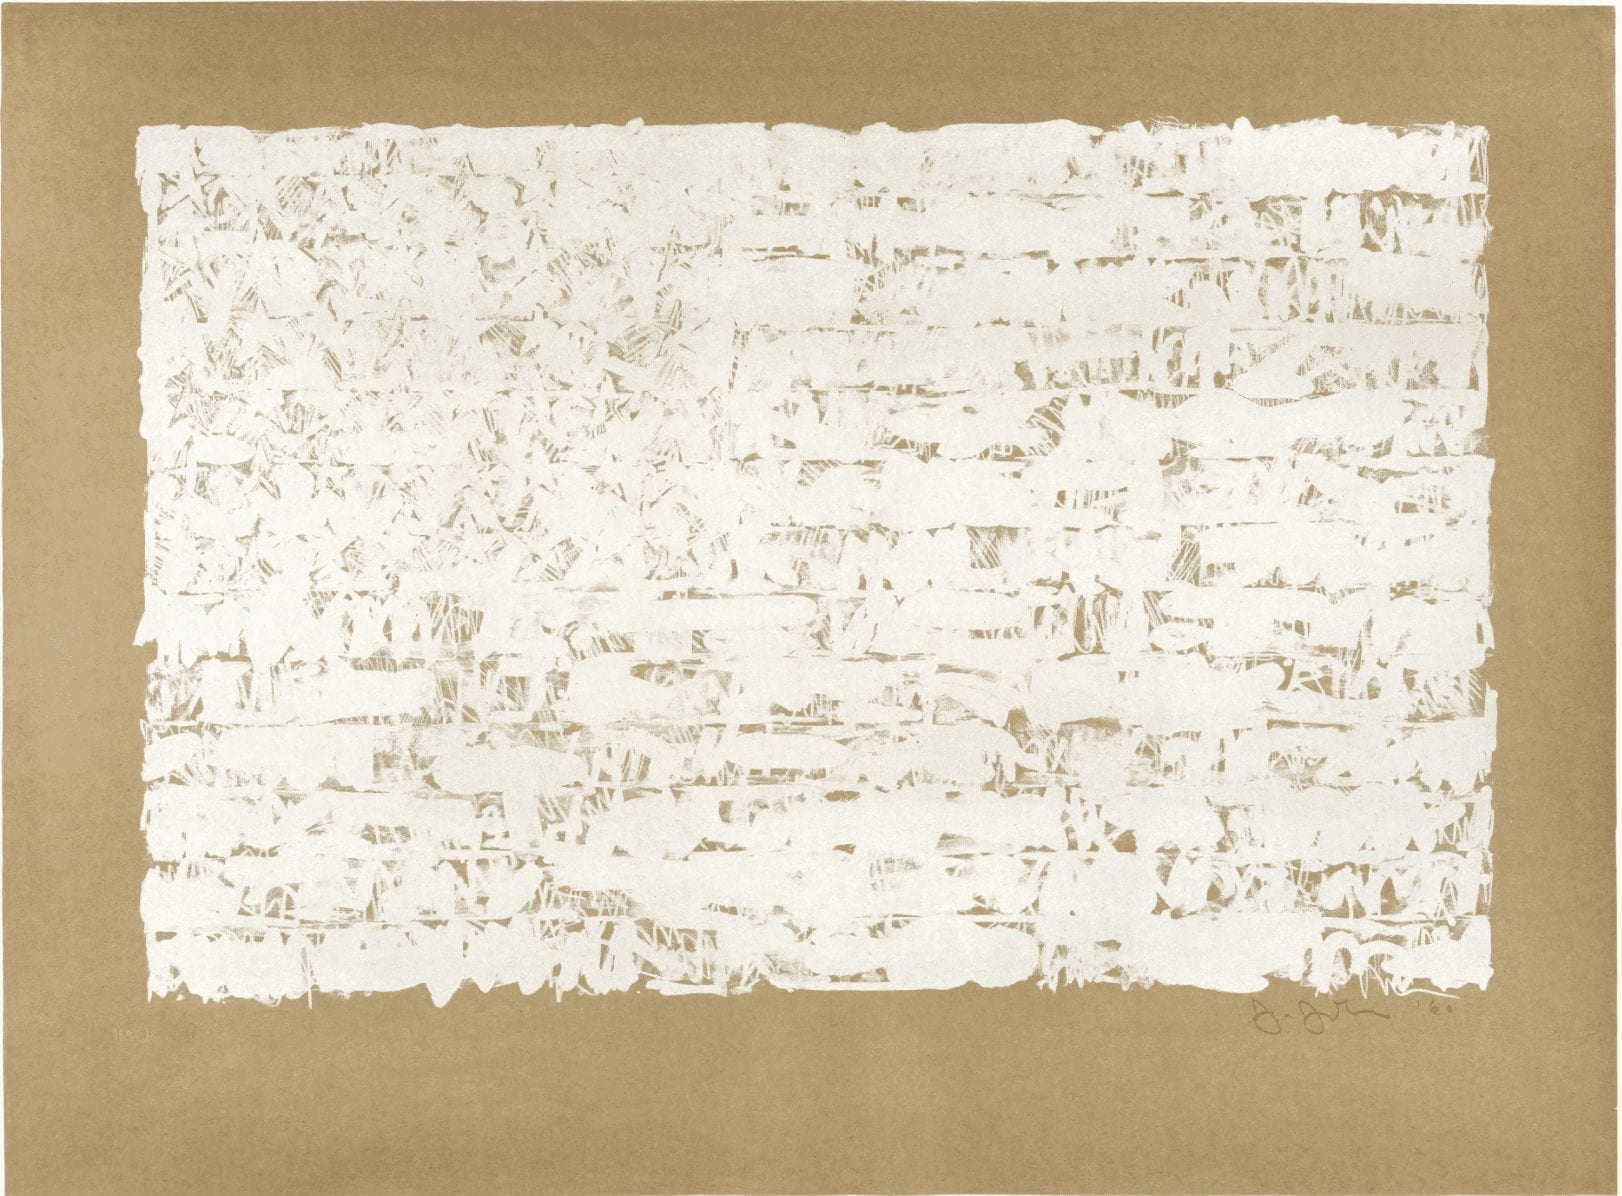 Jasper Johns, Flag II, 1960, Lithograph